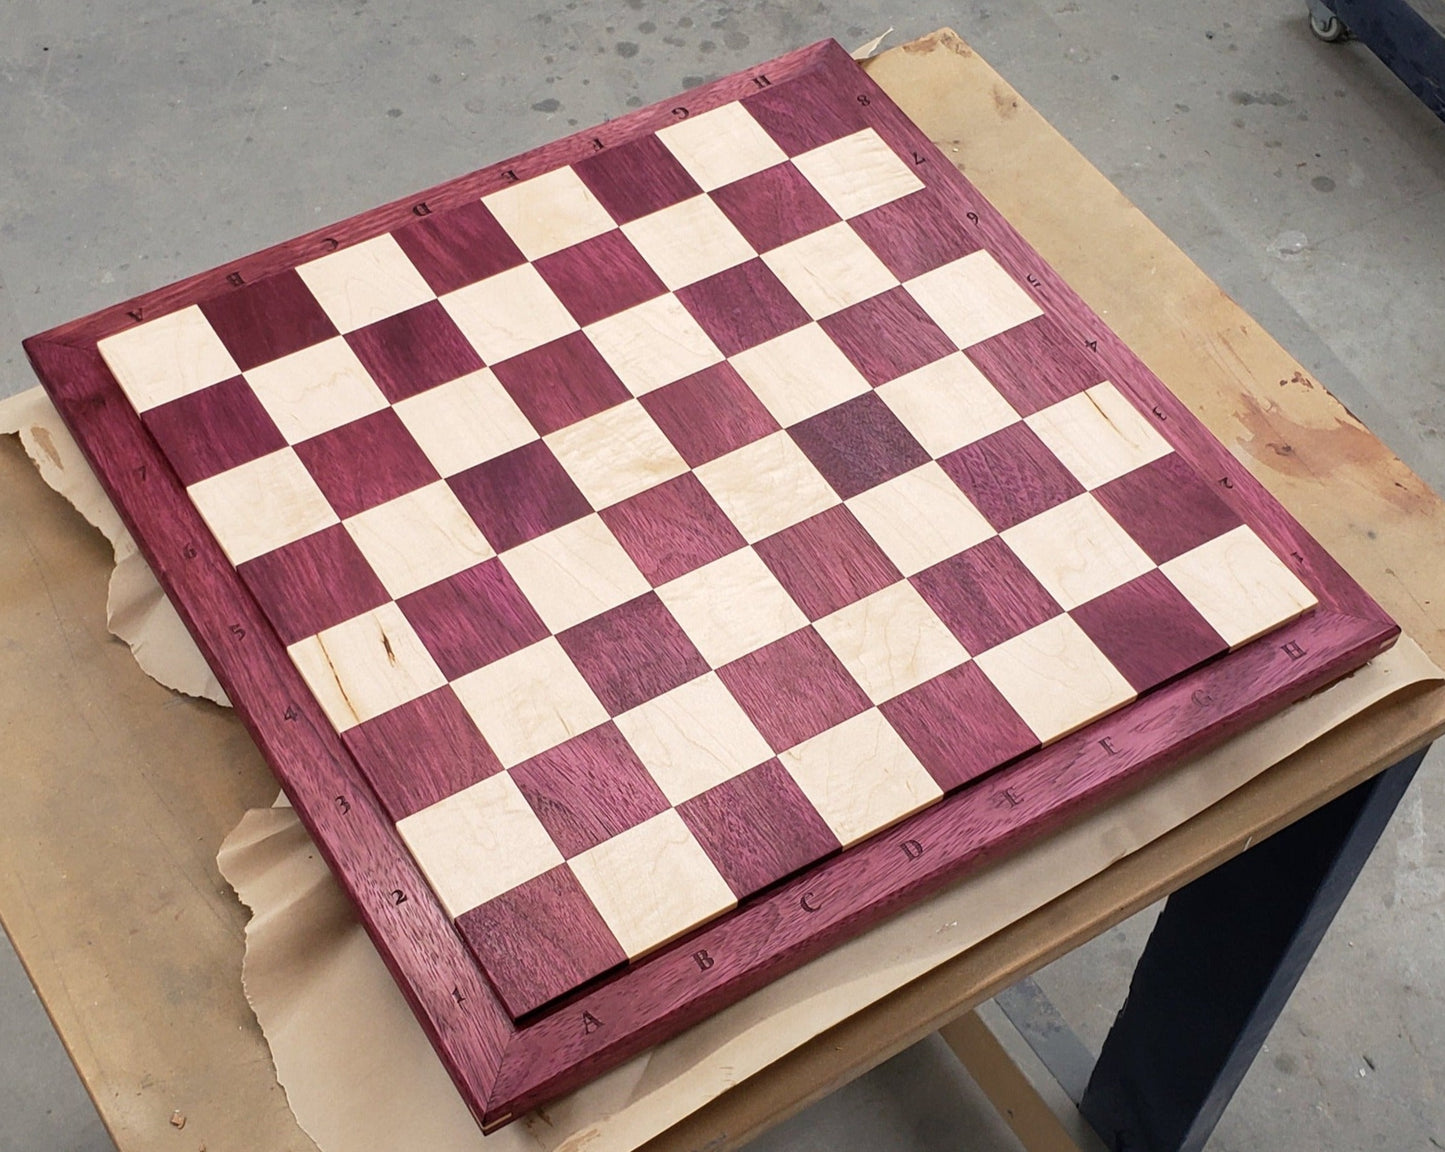 The Richard Chess Board - Purpleheart Hardwood Chess Board - Large Regulation Size - 100% Solid Purple-Heart Wood and Sugar Maple - Handmade in British Columbia